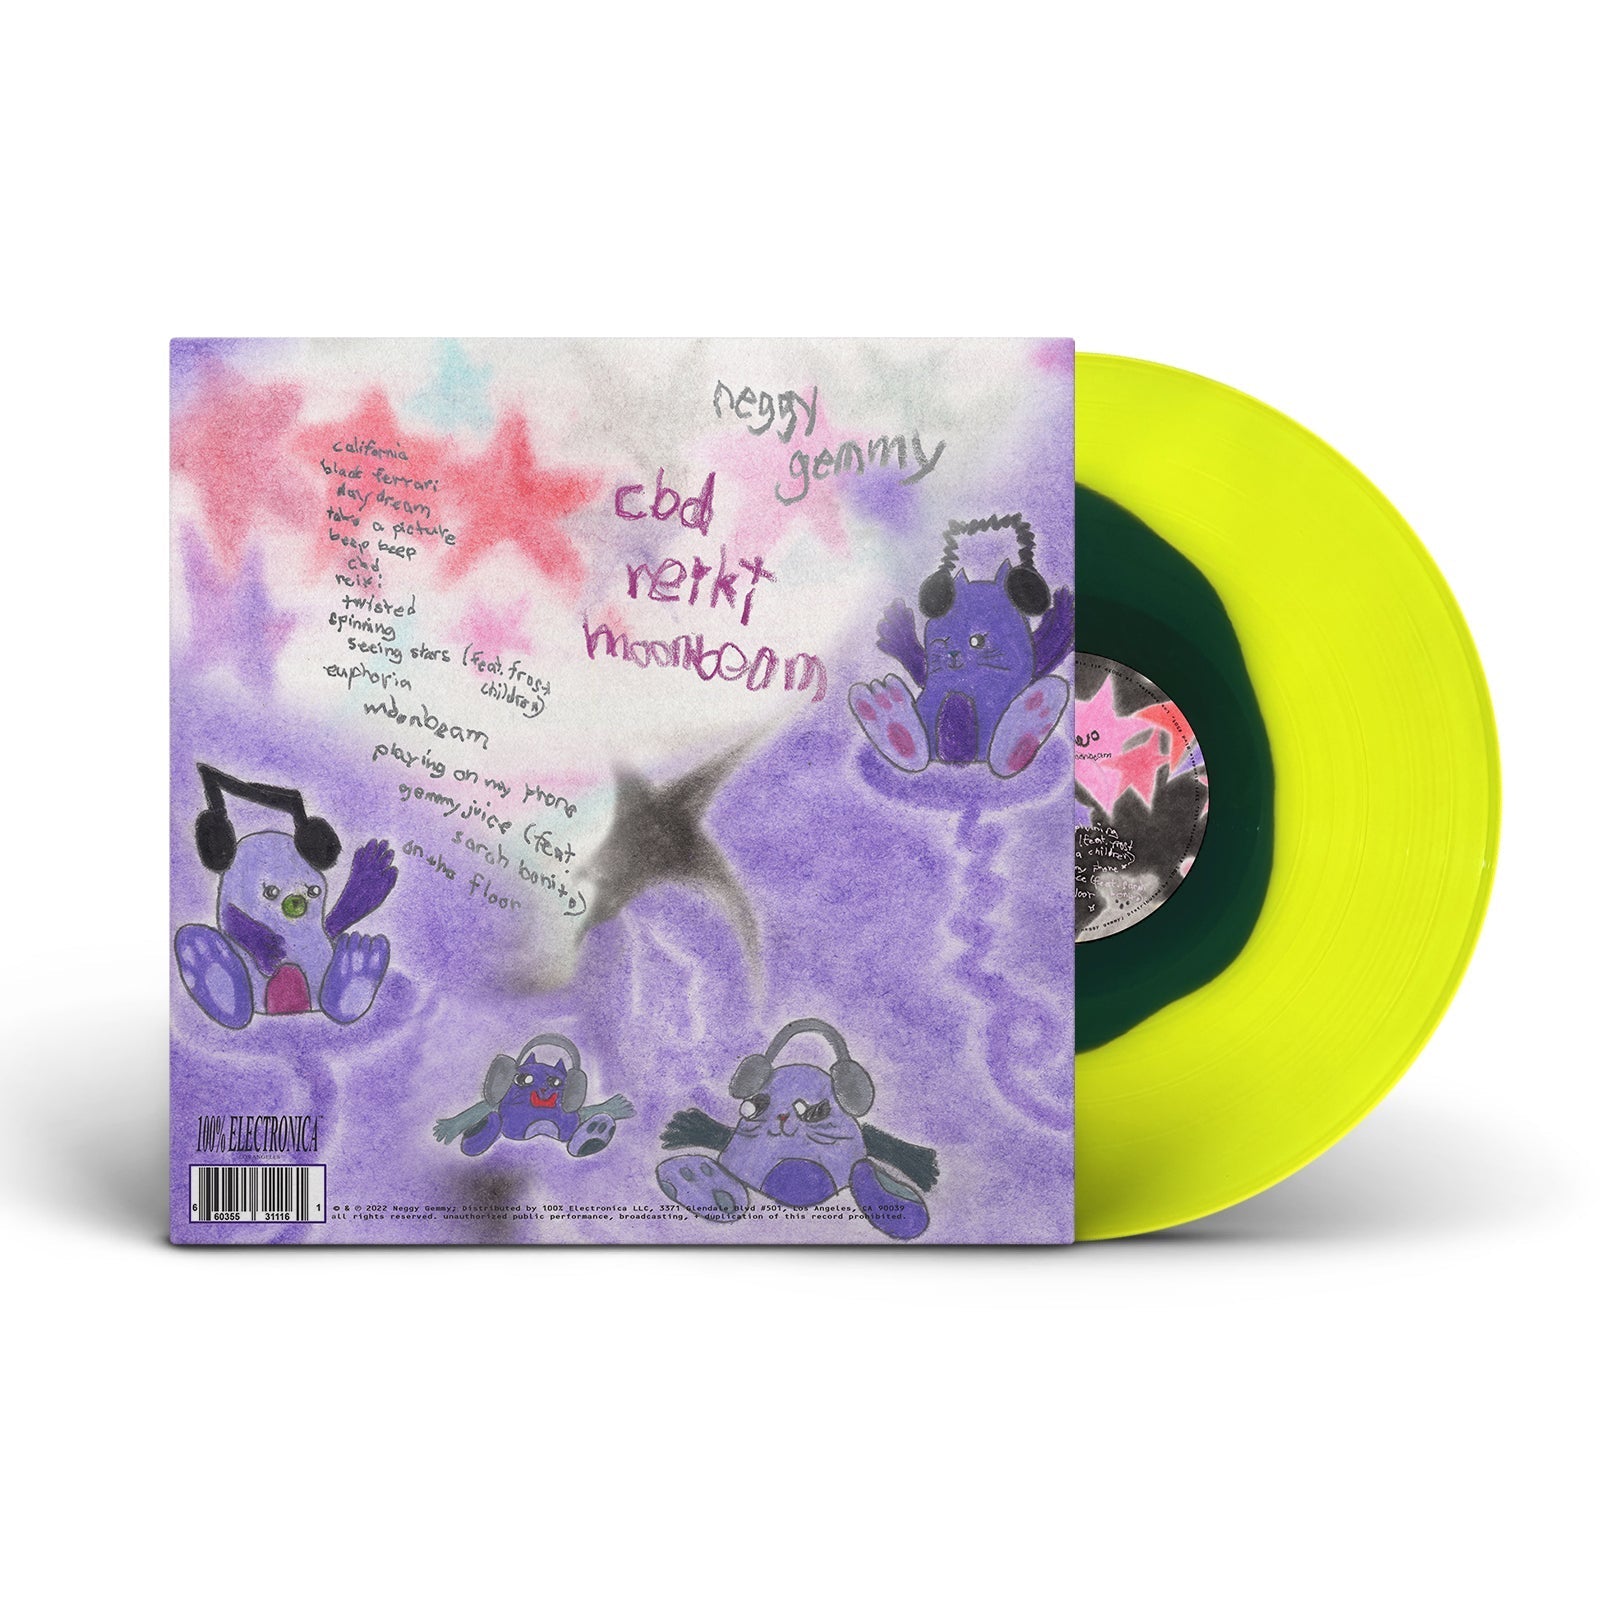 Neggy Gemmy - CBD Reiki Moonbeam LP - 100% Electronica Official Store (Photo 3)